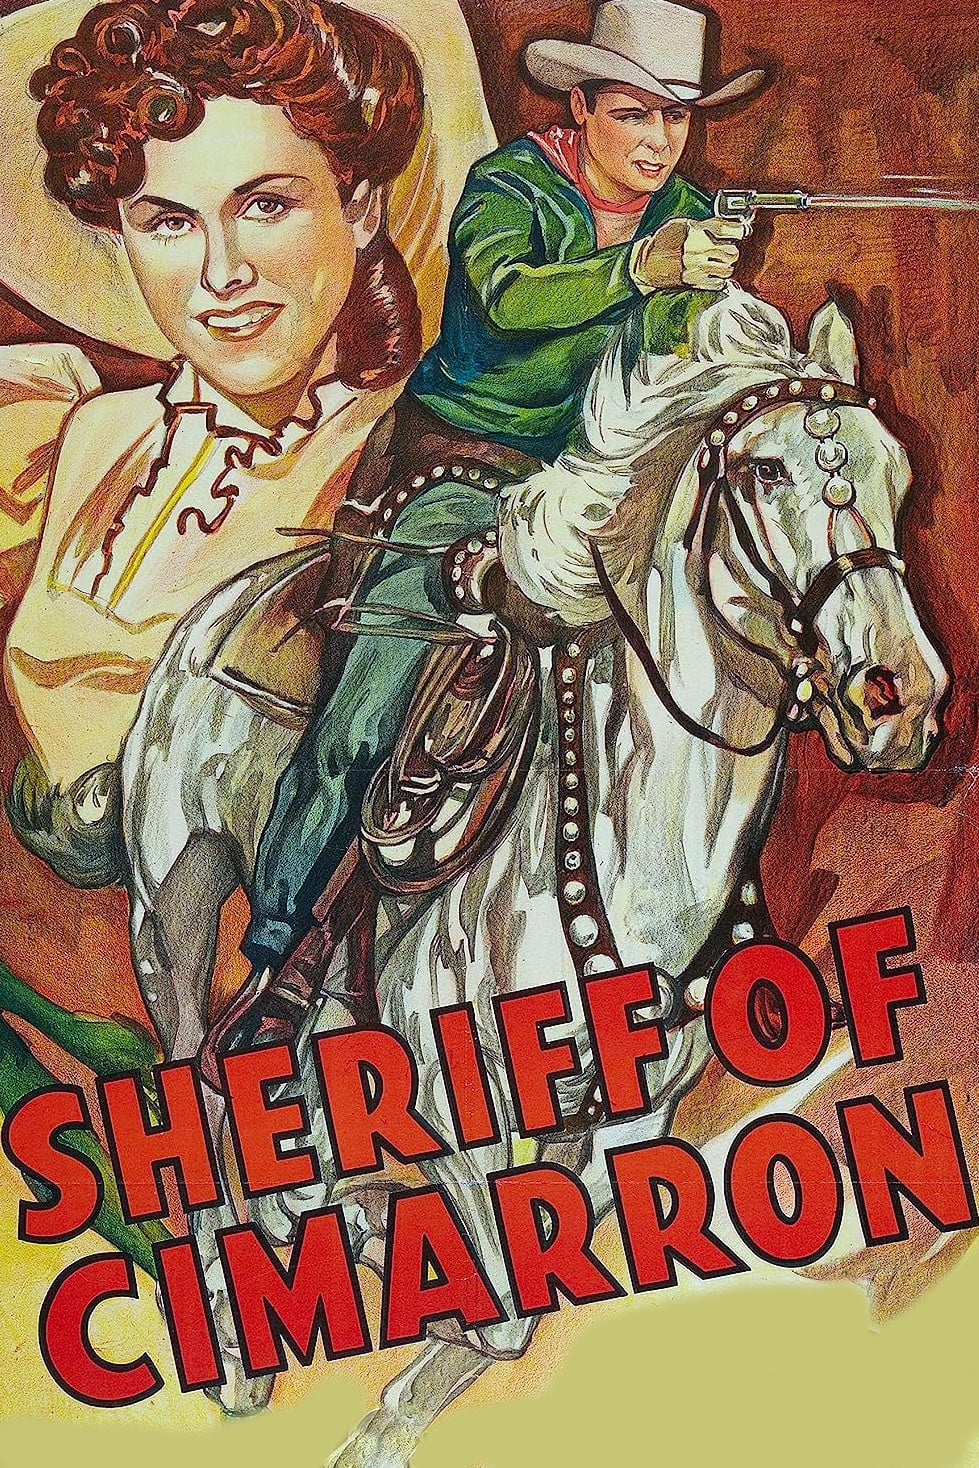 Sheriff of Cimarron (1945)